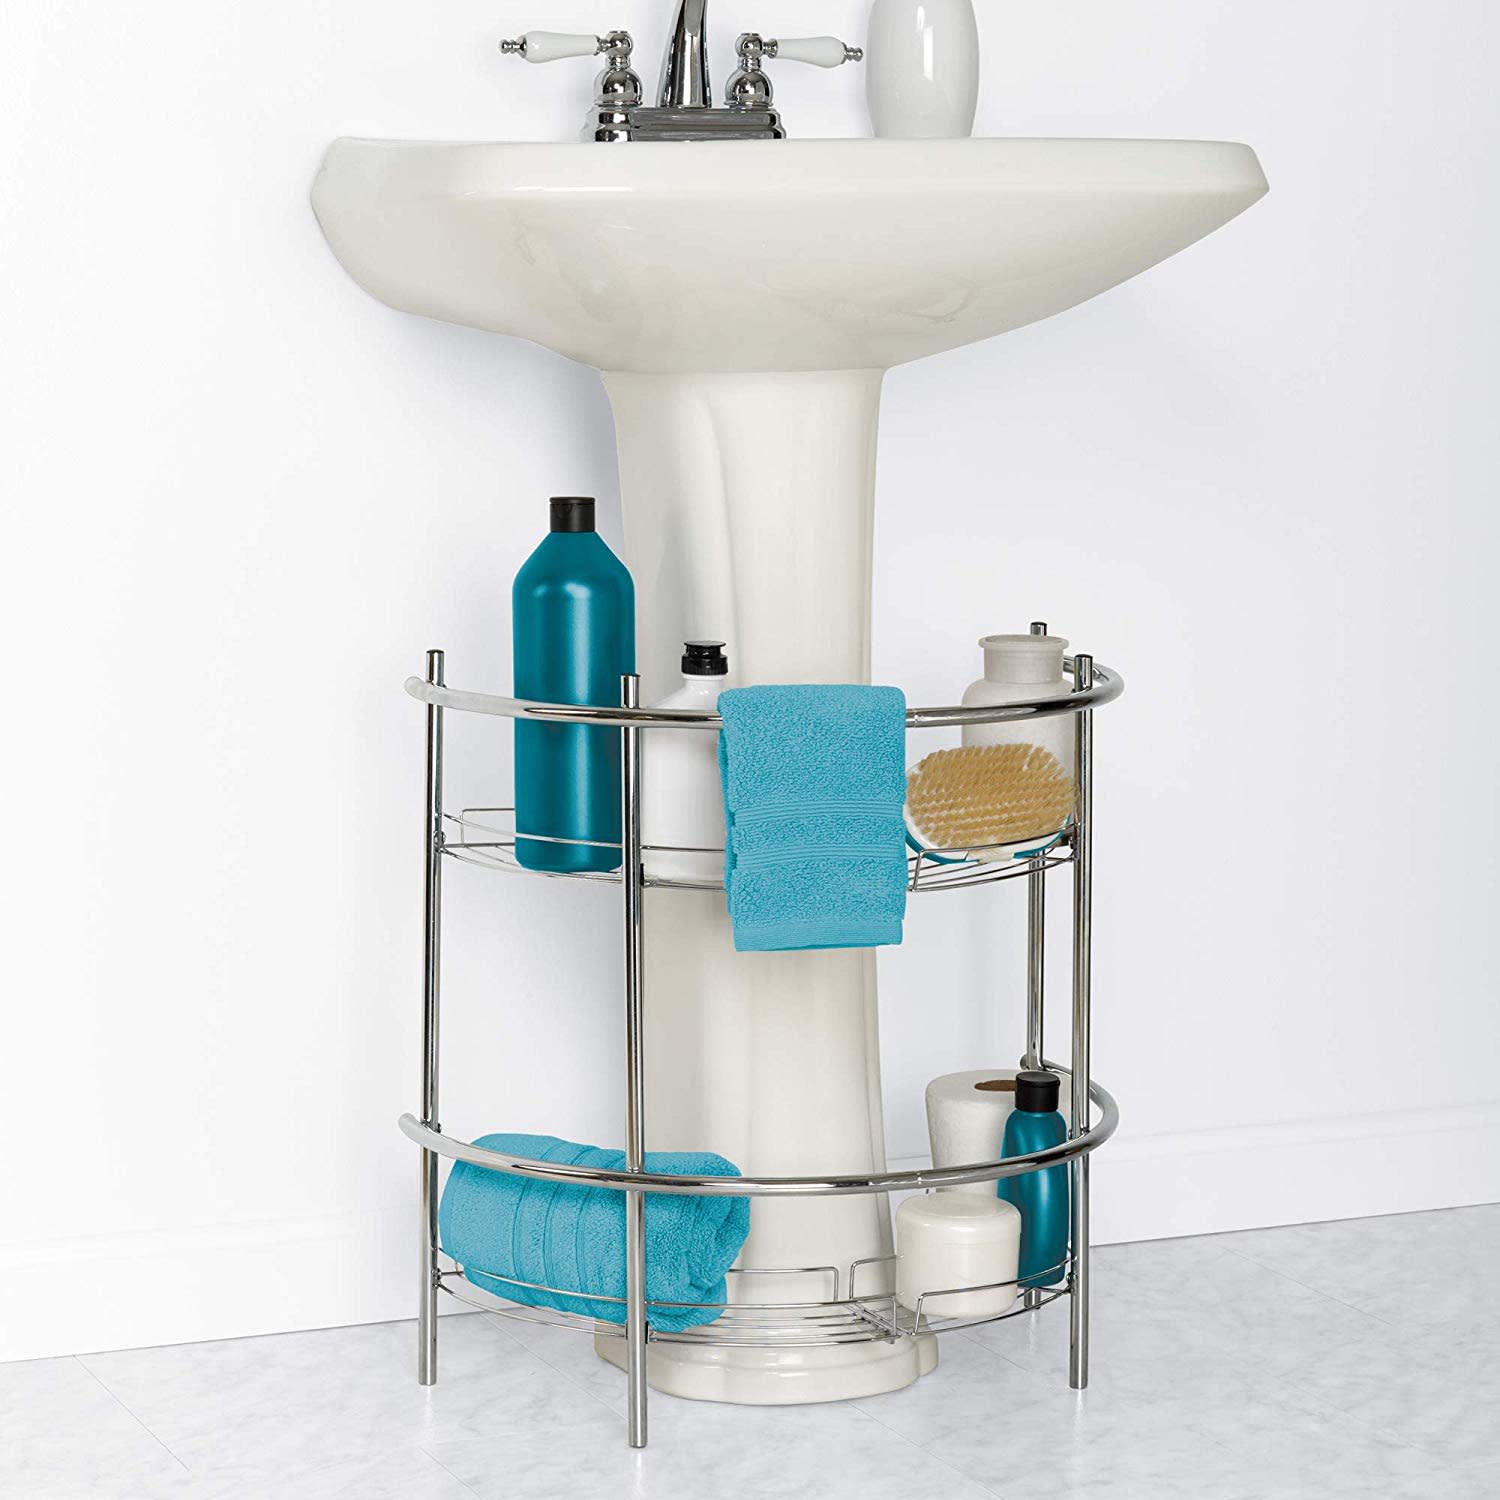 https://cdn.apartmenttherapy.info/image/upload/v1582928580/at/organize-clean/pedestal-sink-storage.jpg